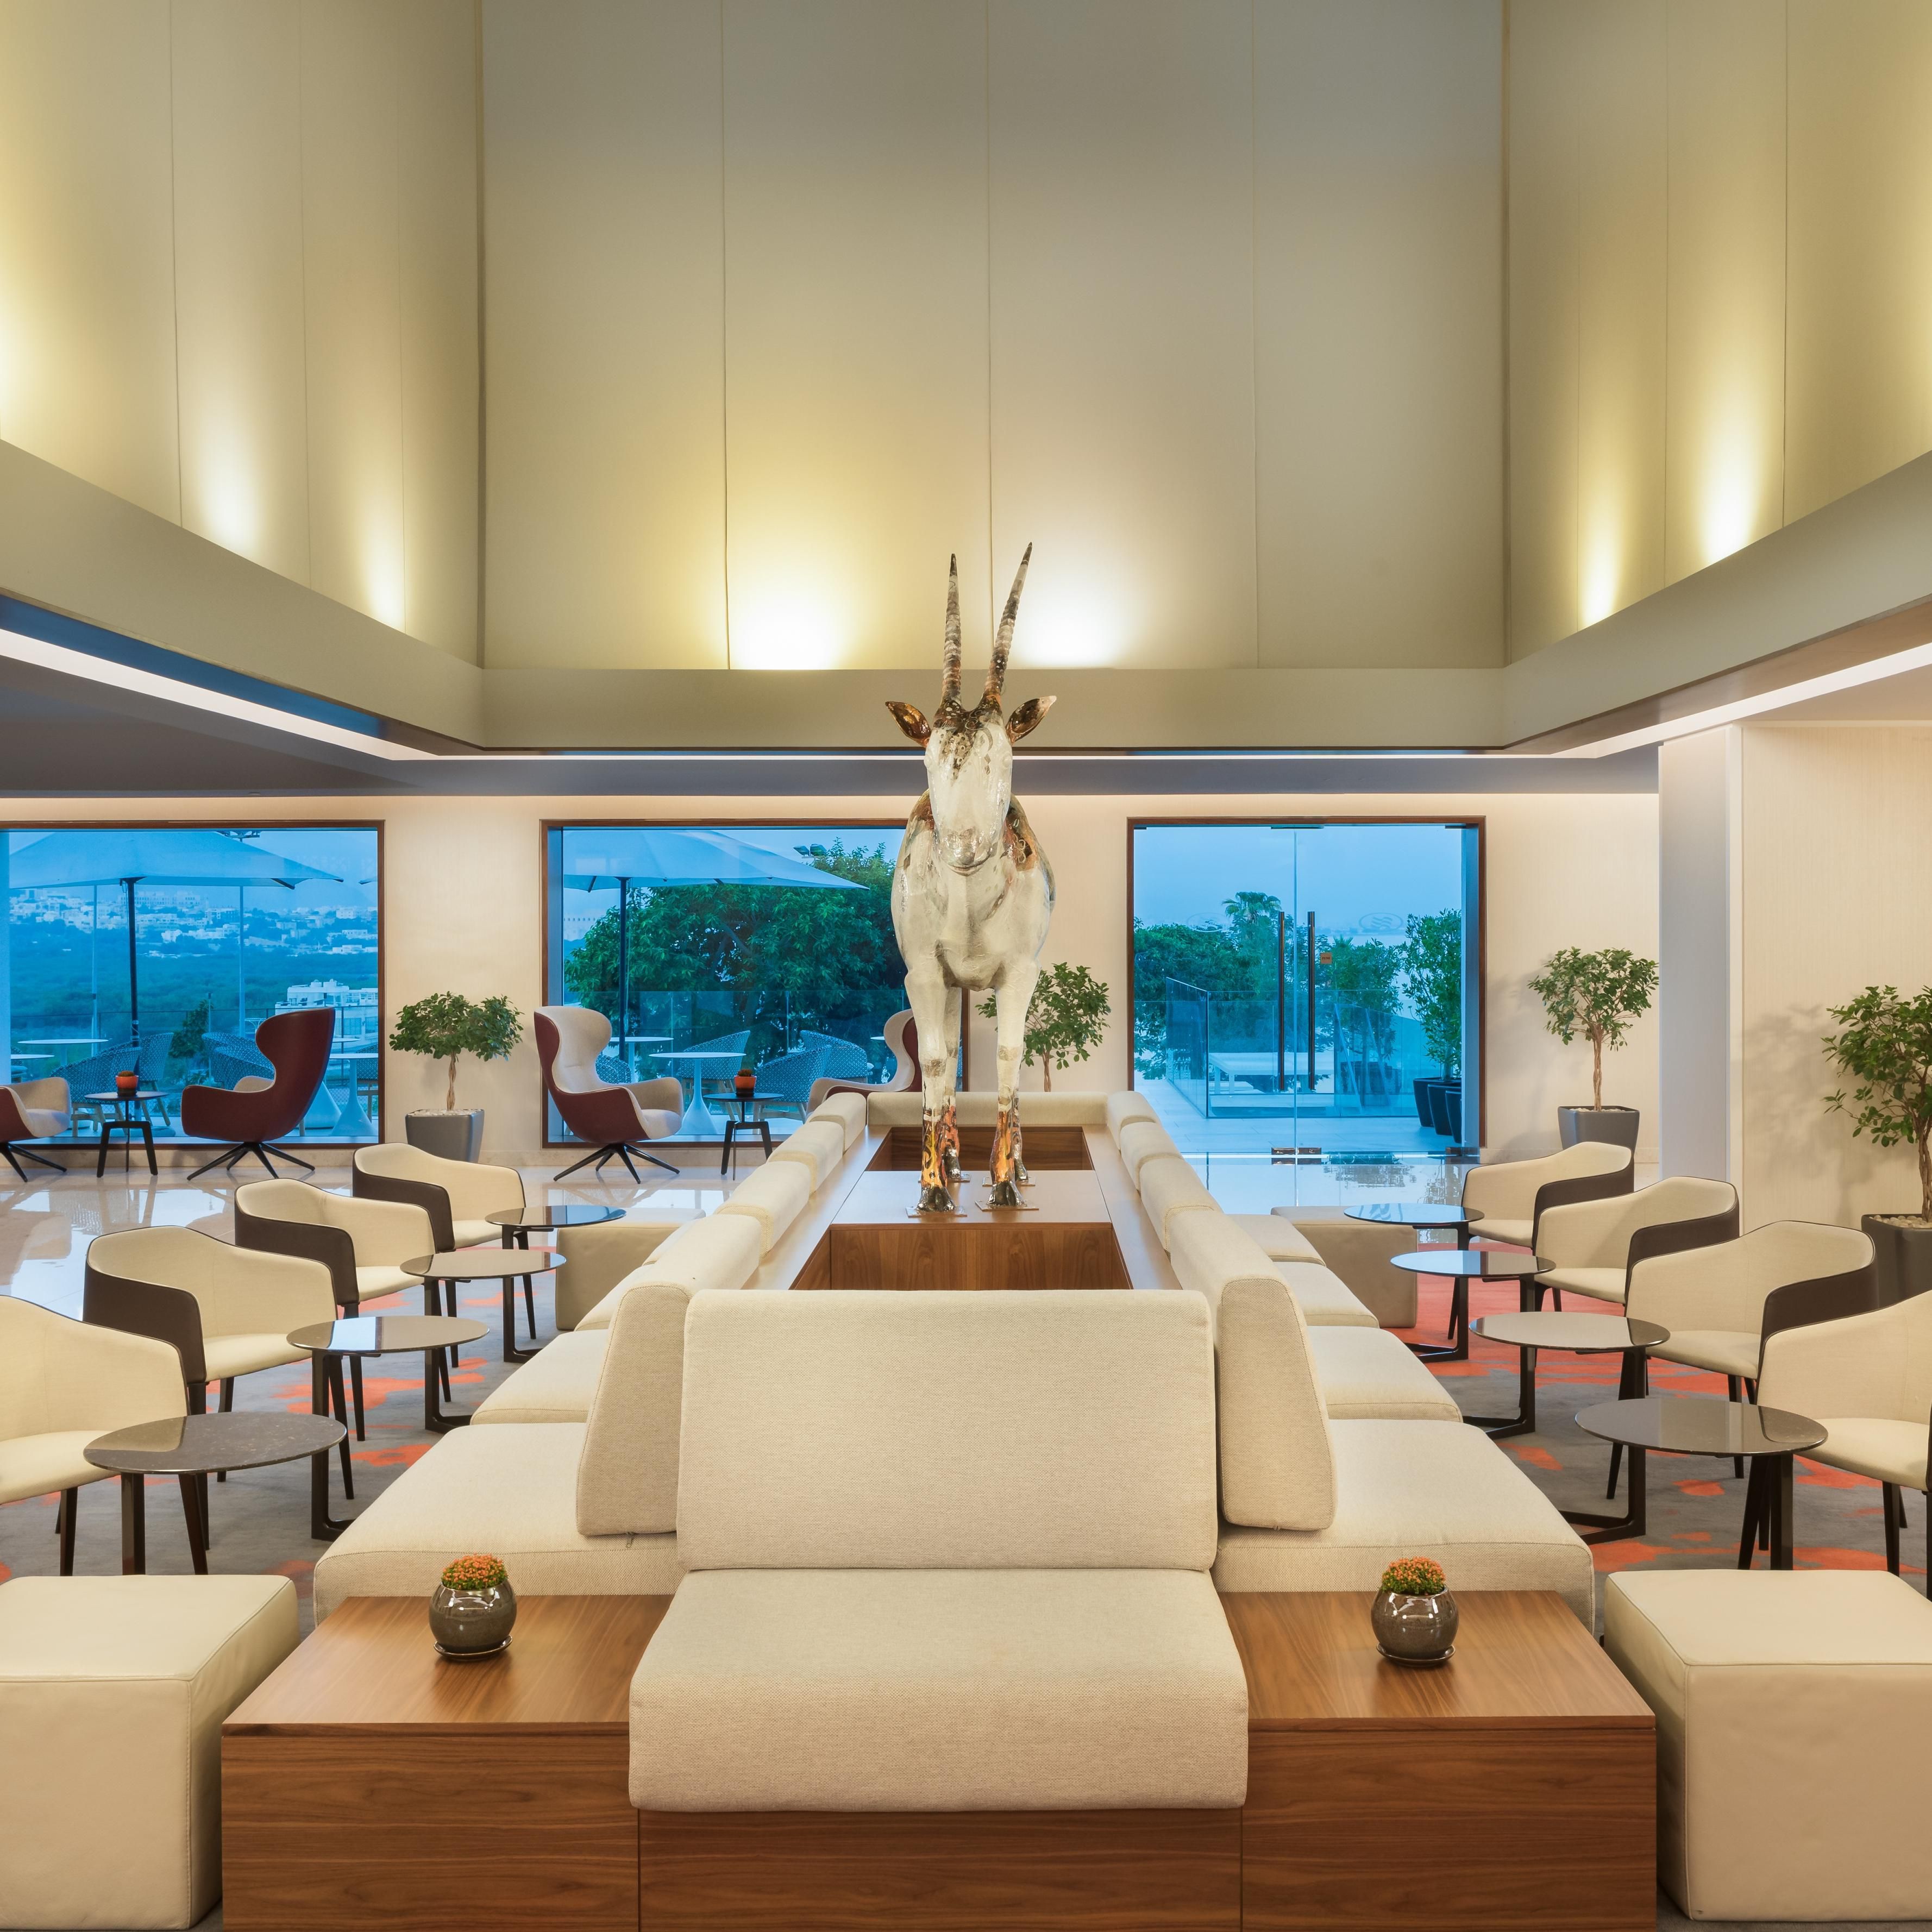 Modern, contemporary lobby lounge